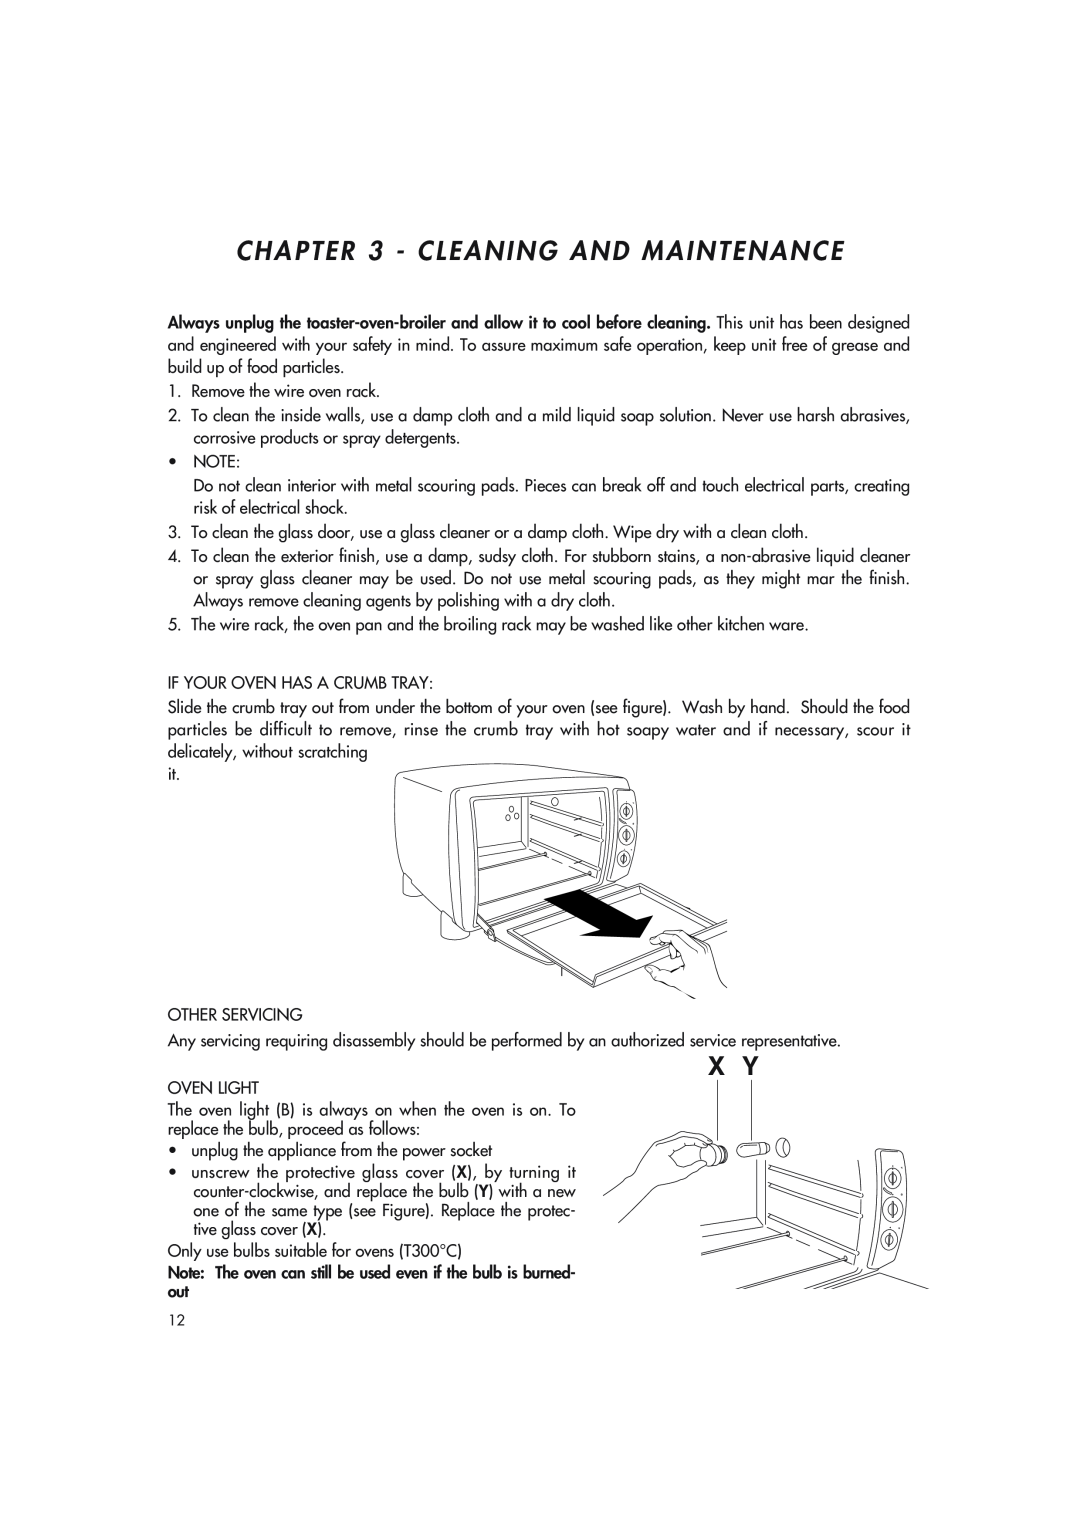 DeLonghi xu1837w manual Cleaning And Maintenance 